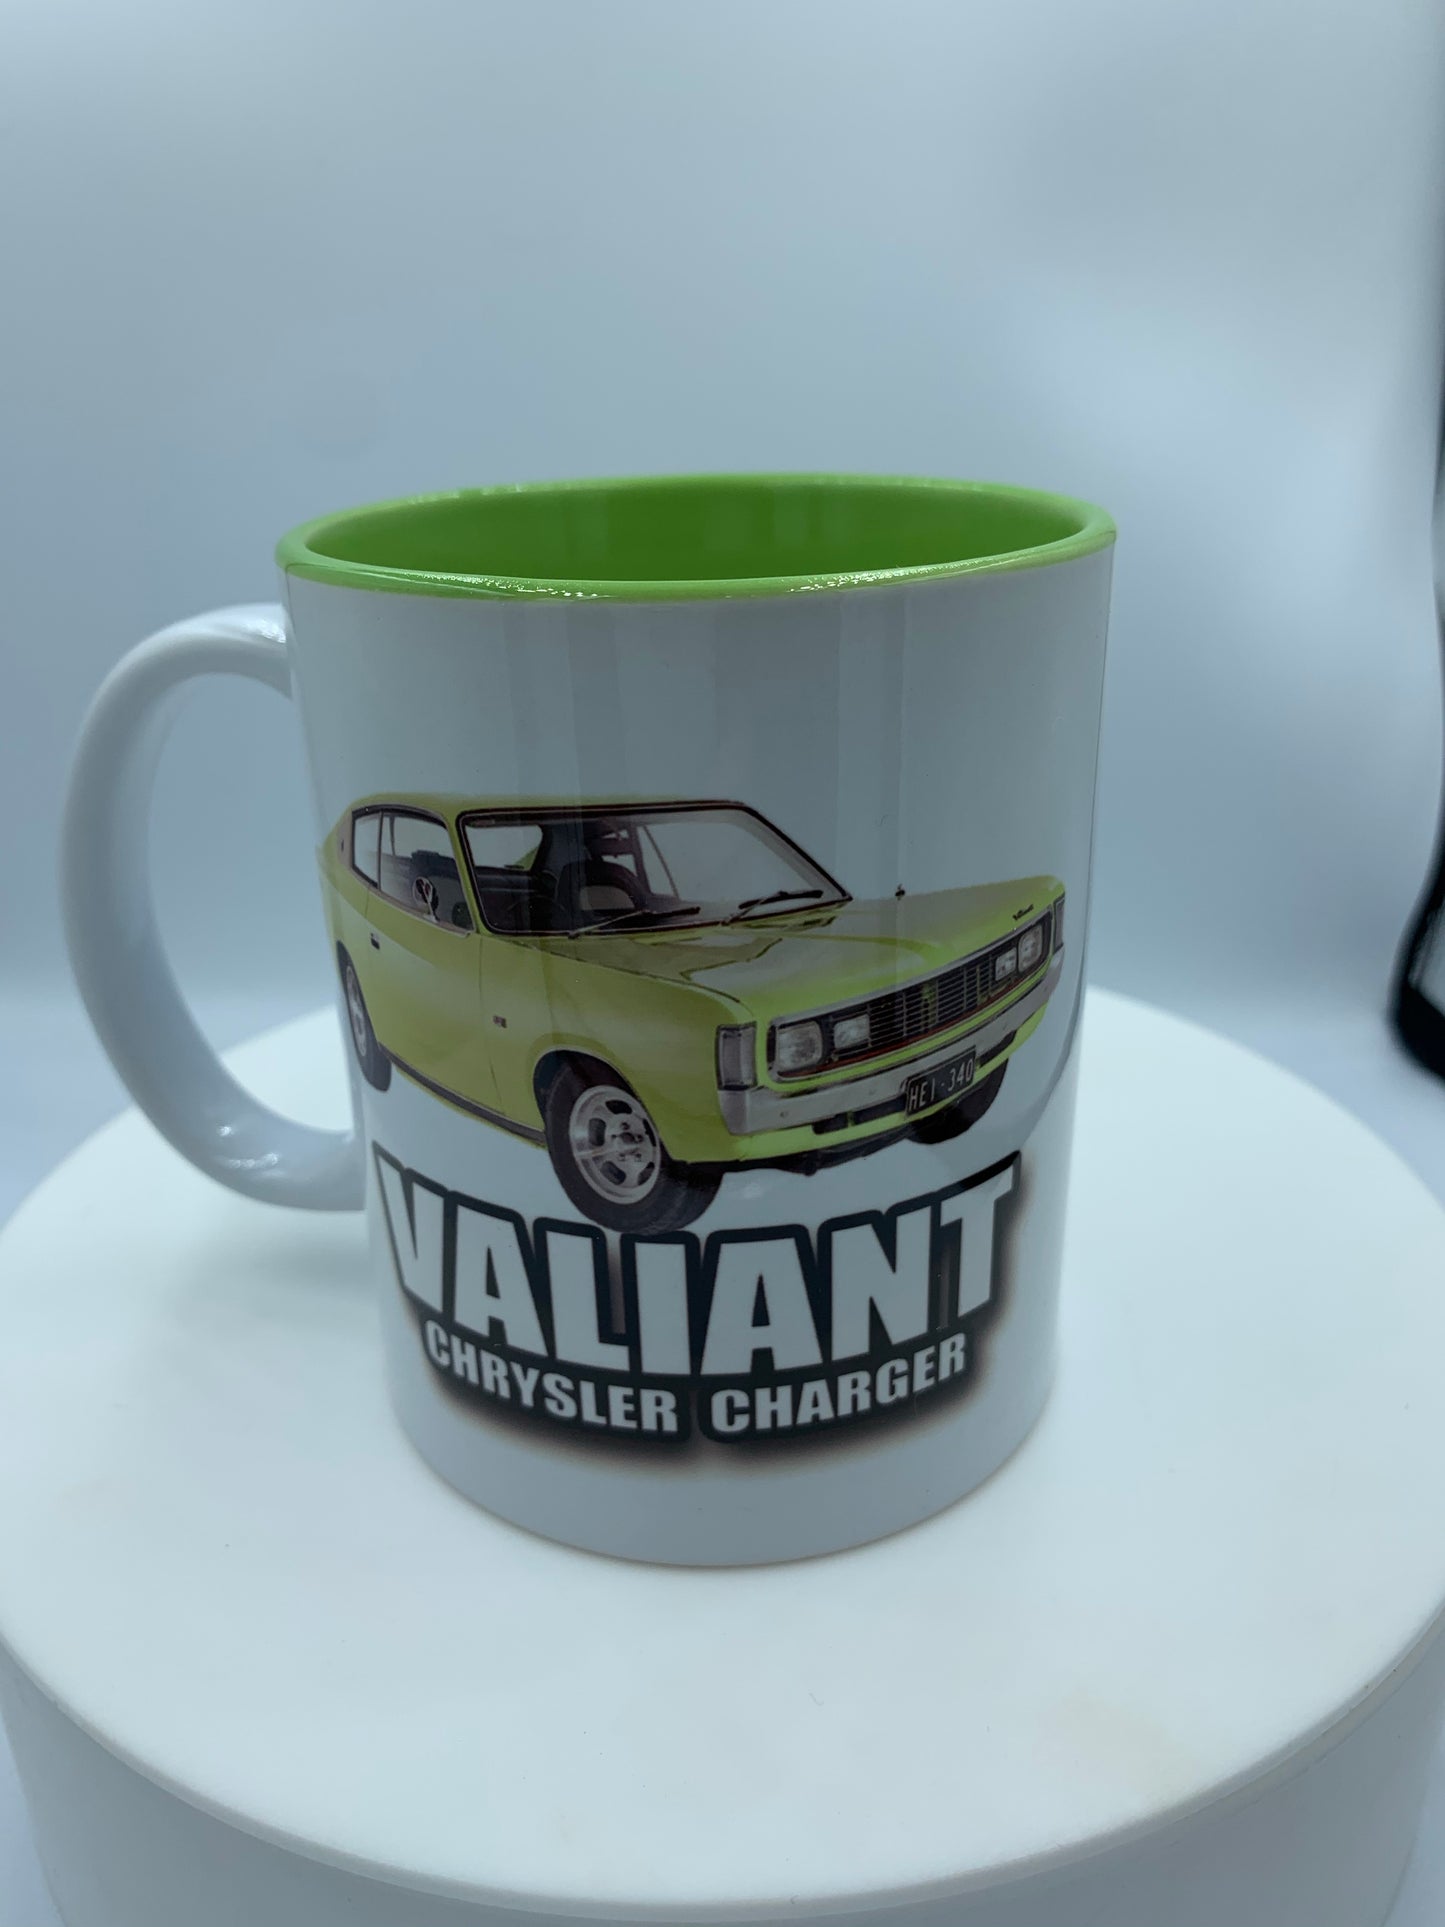 Chrysler Valiant Charger - Mug